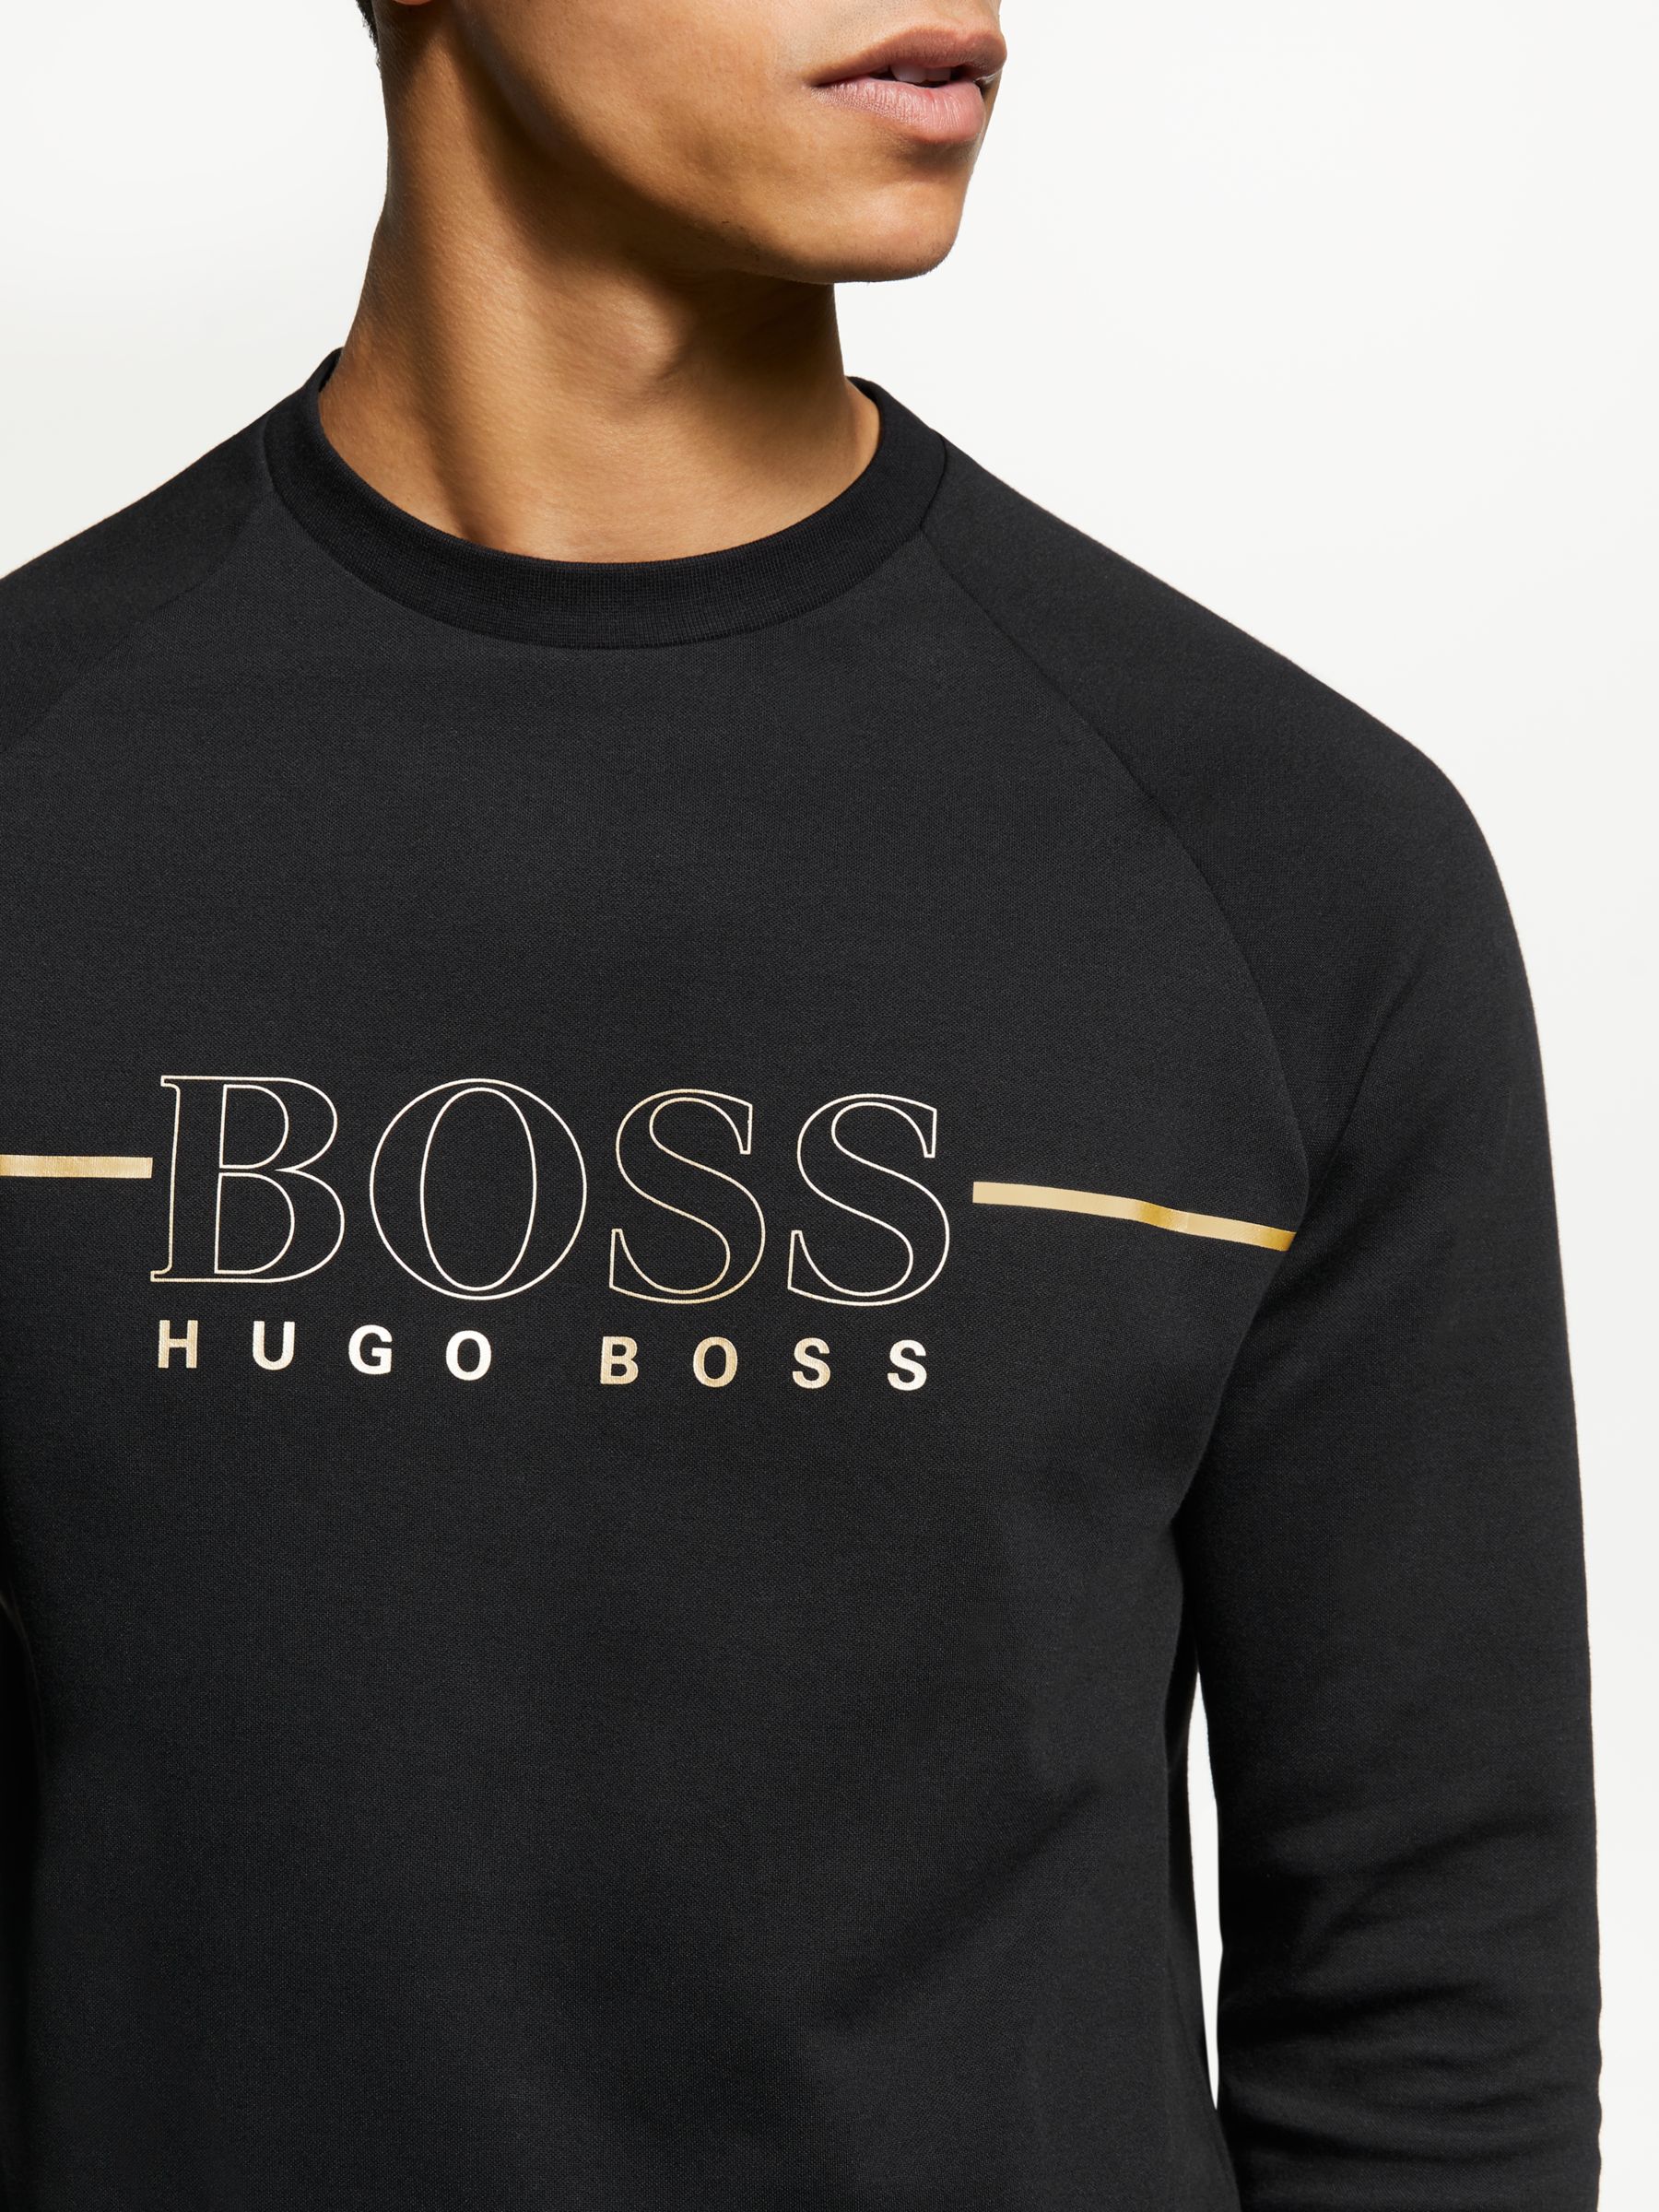 HUGO BOSS Logo Sweatshirt, Black at 